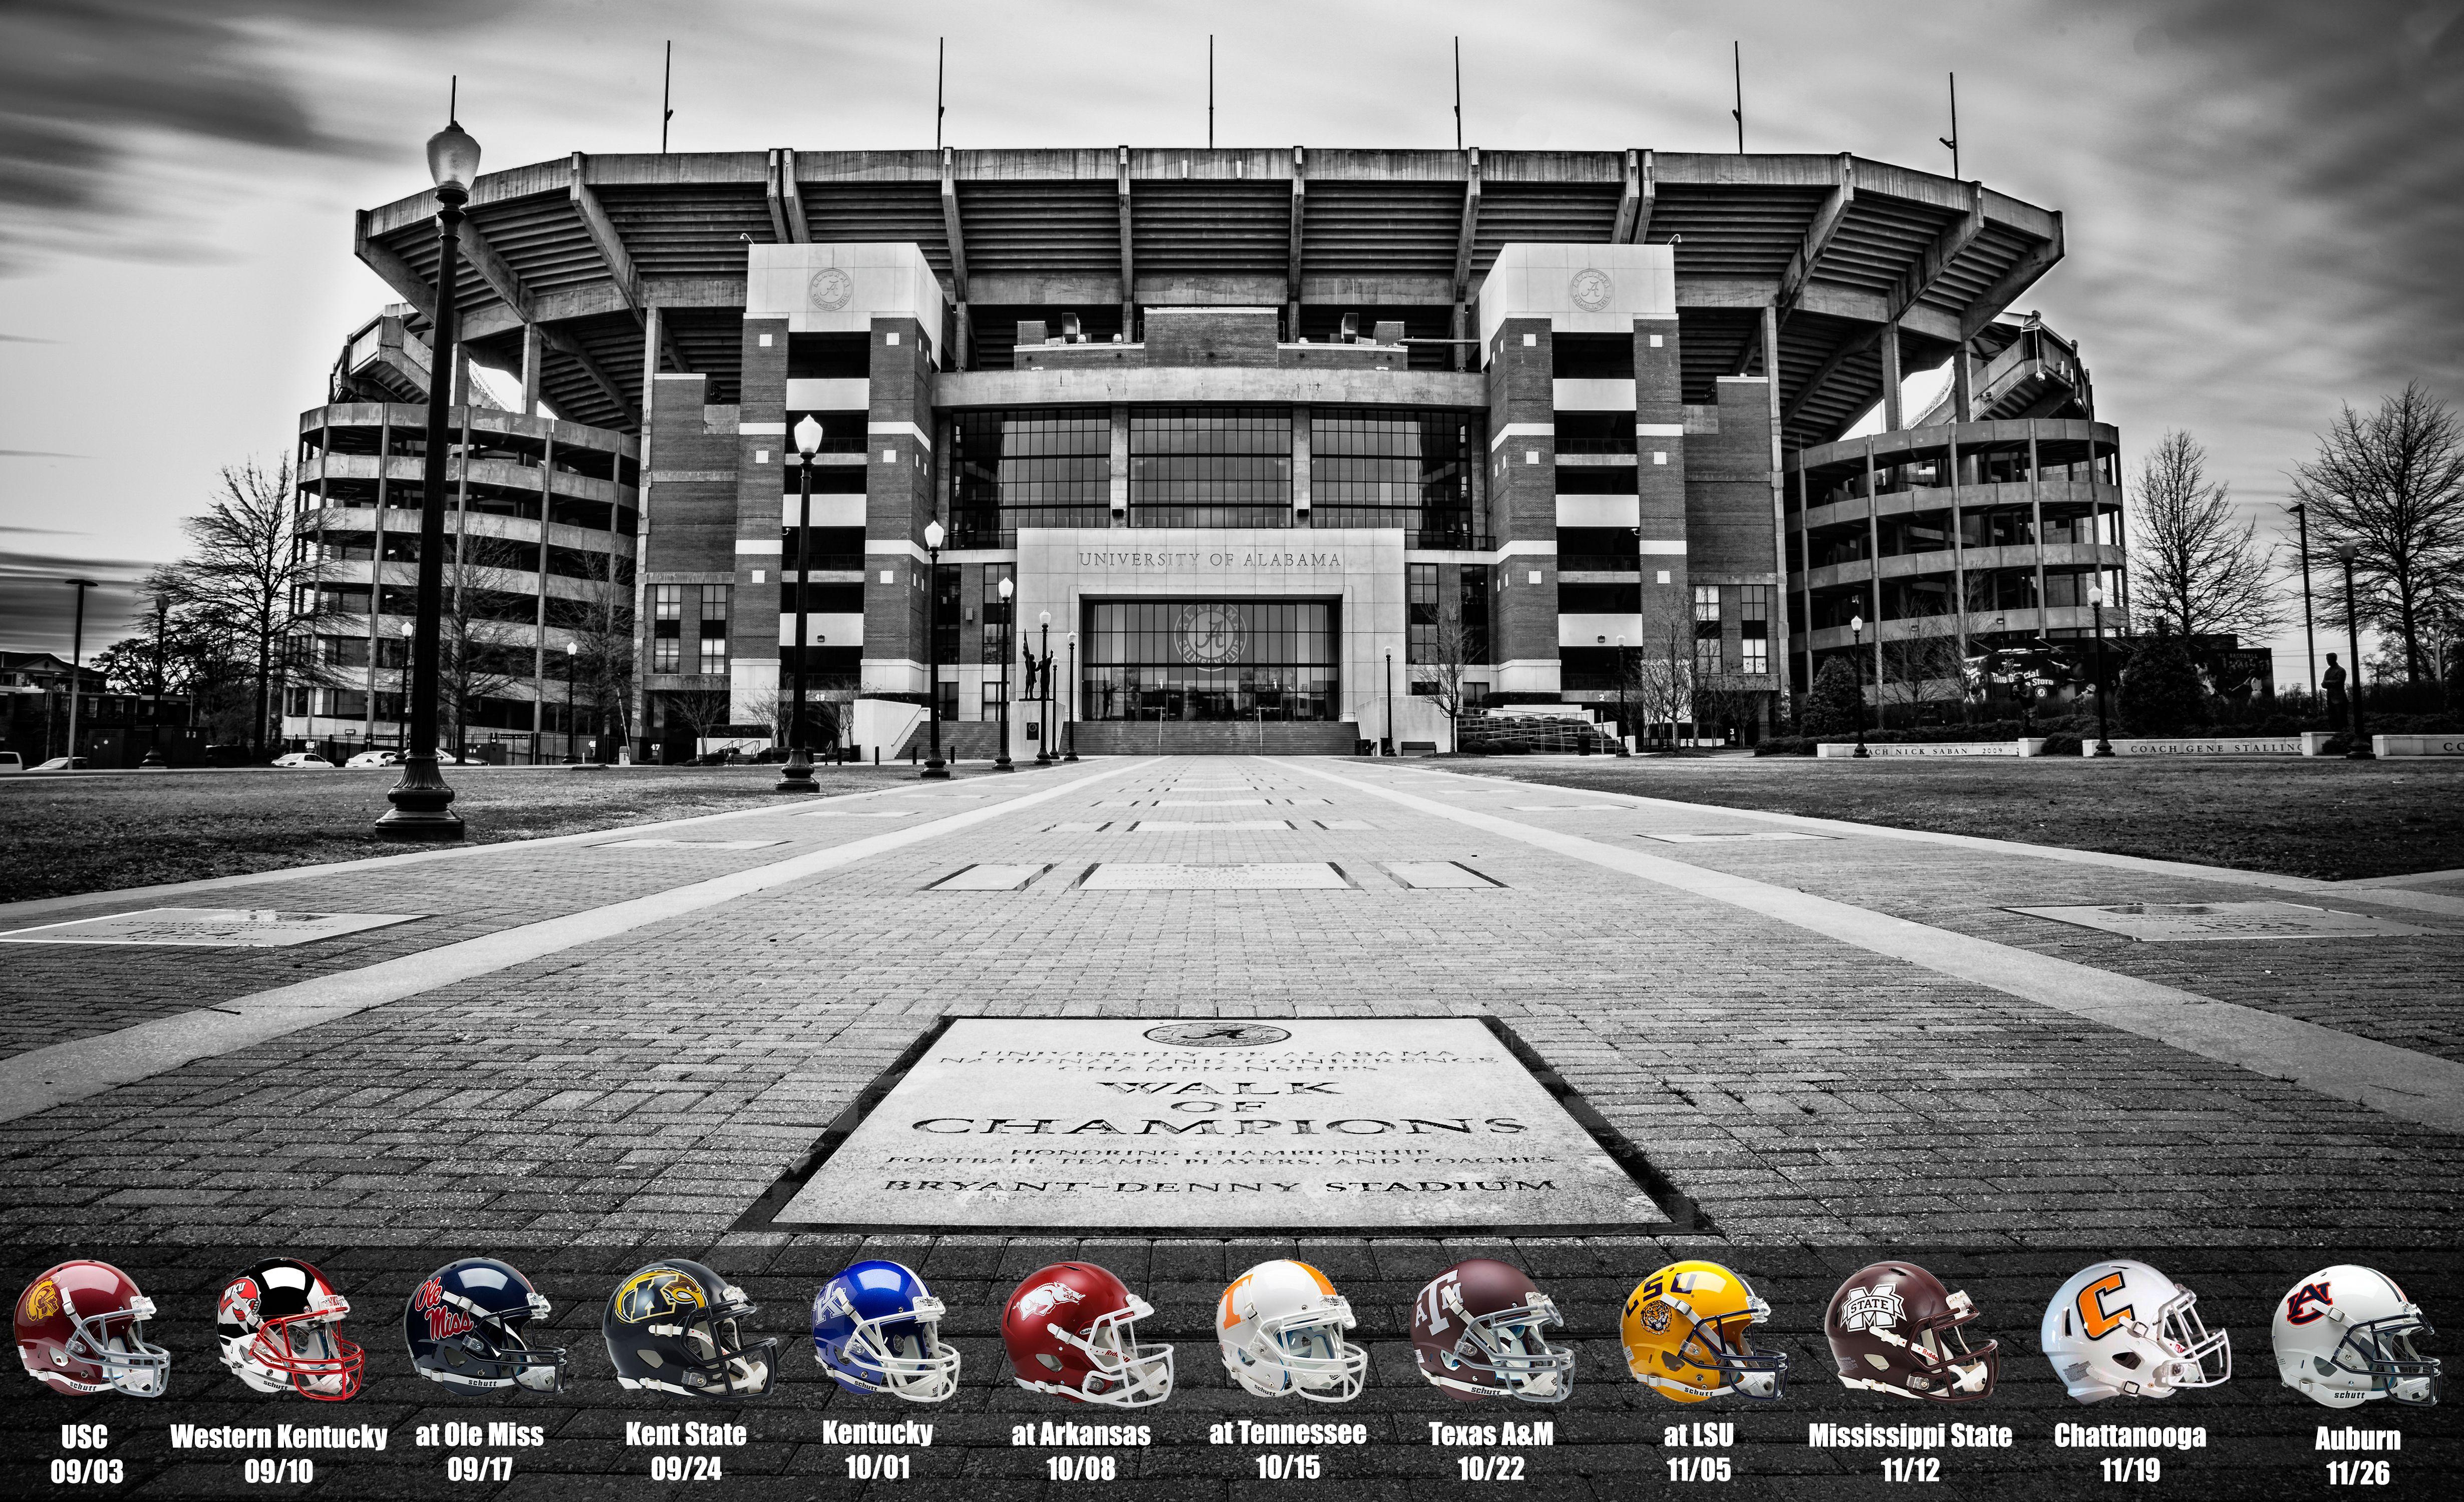 Adorable Alabama Football 2015 Schedule Picture, Alabama Football